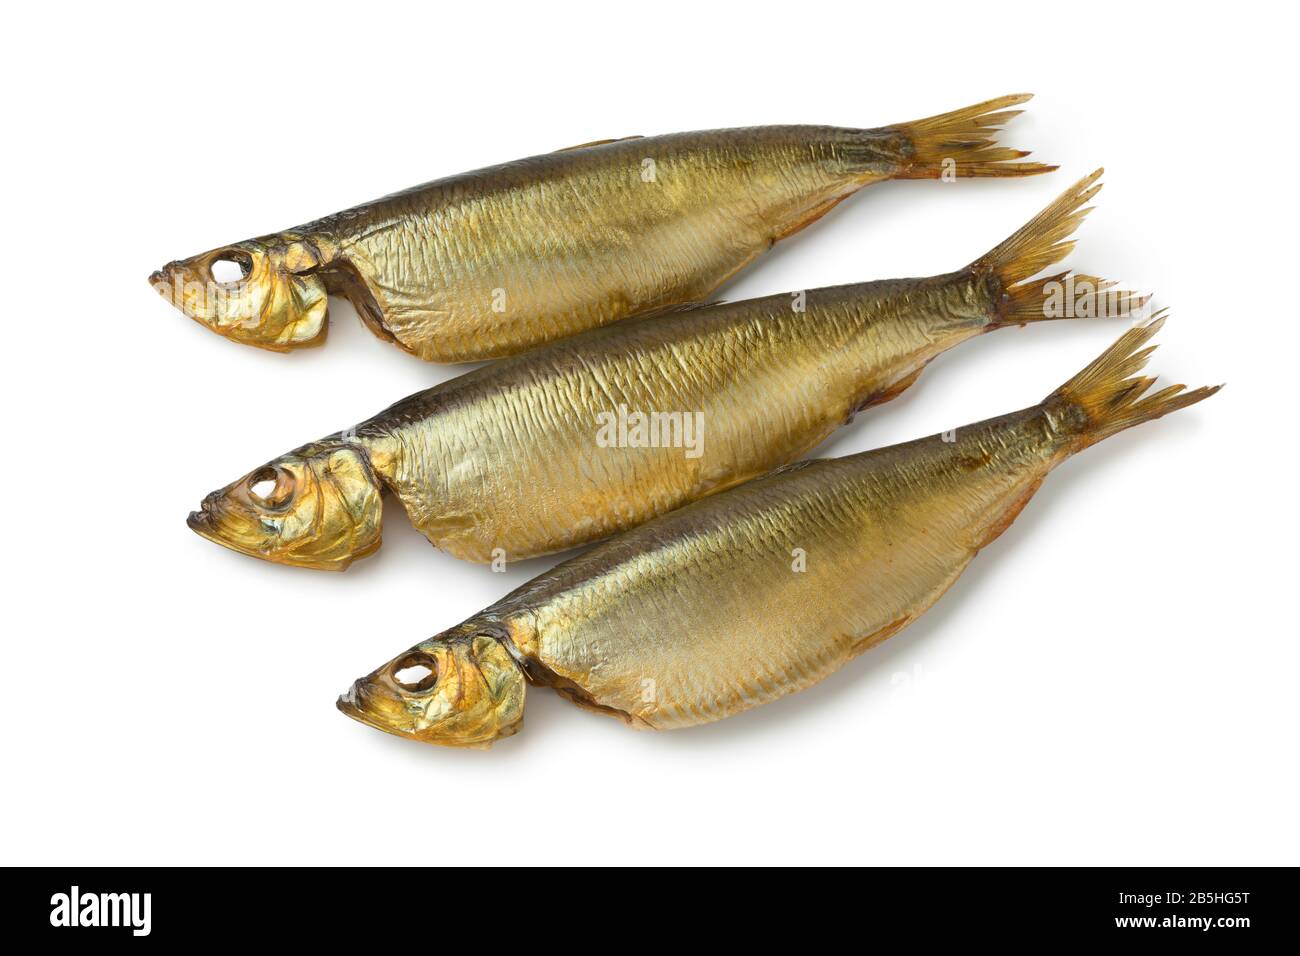 Three whole Bucklings, hot smoked herring, isolated on white background Stock Photo